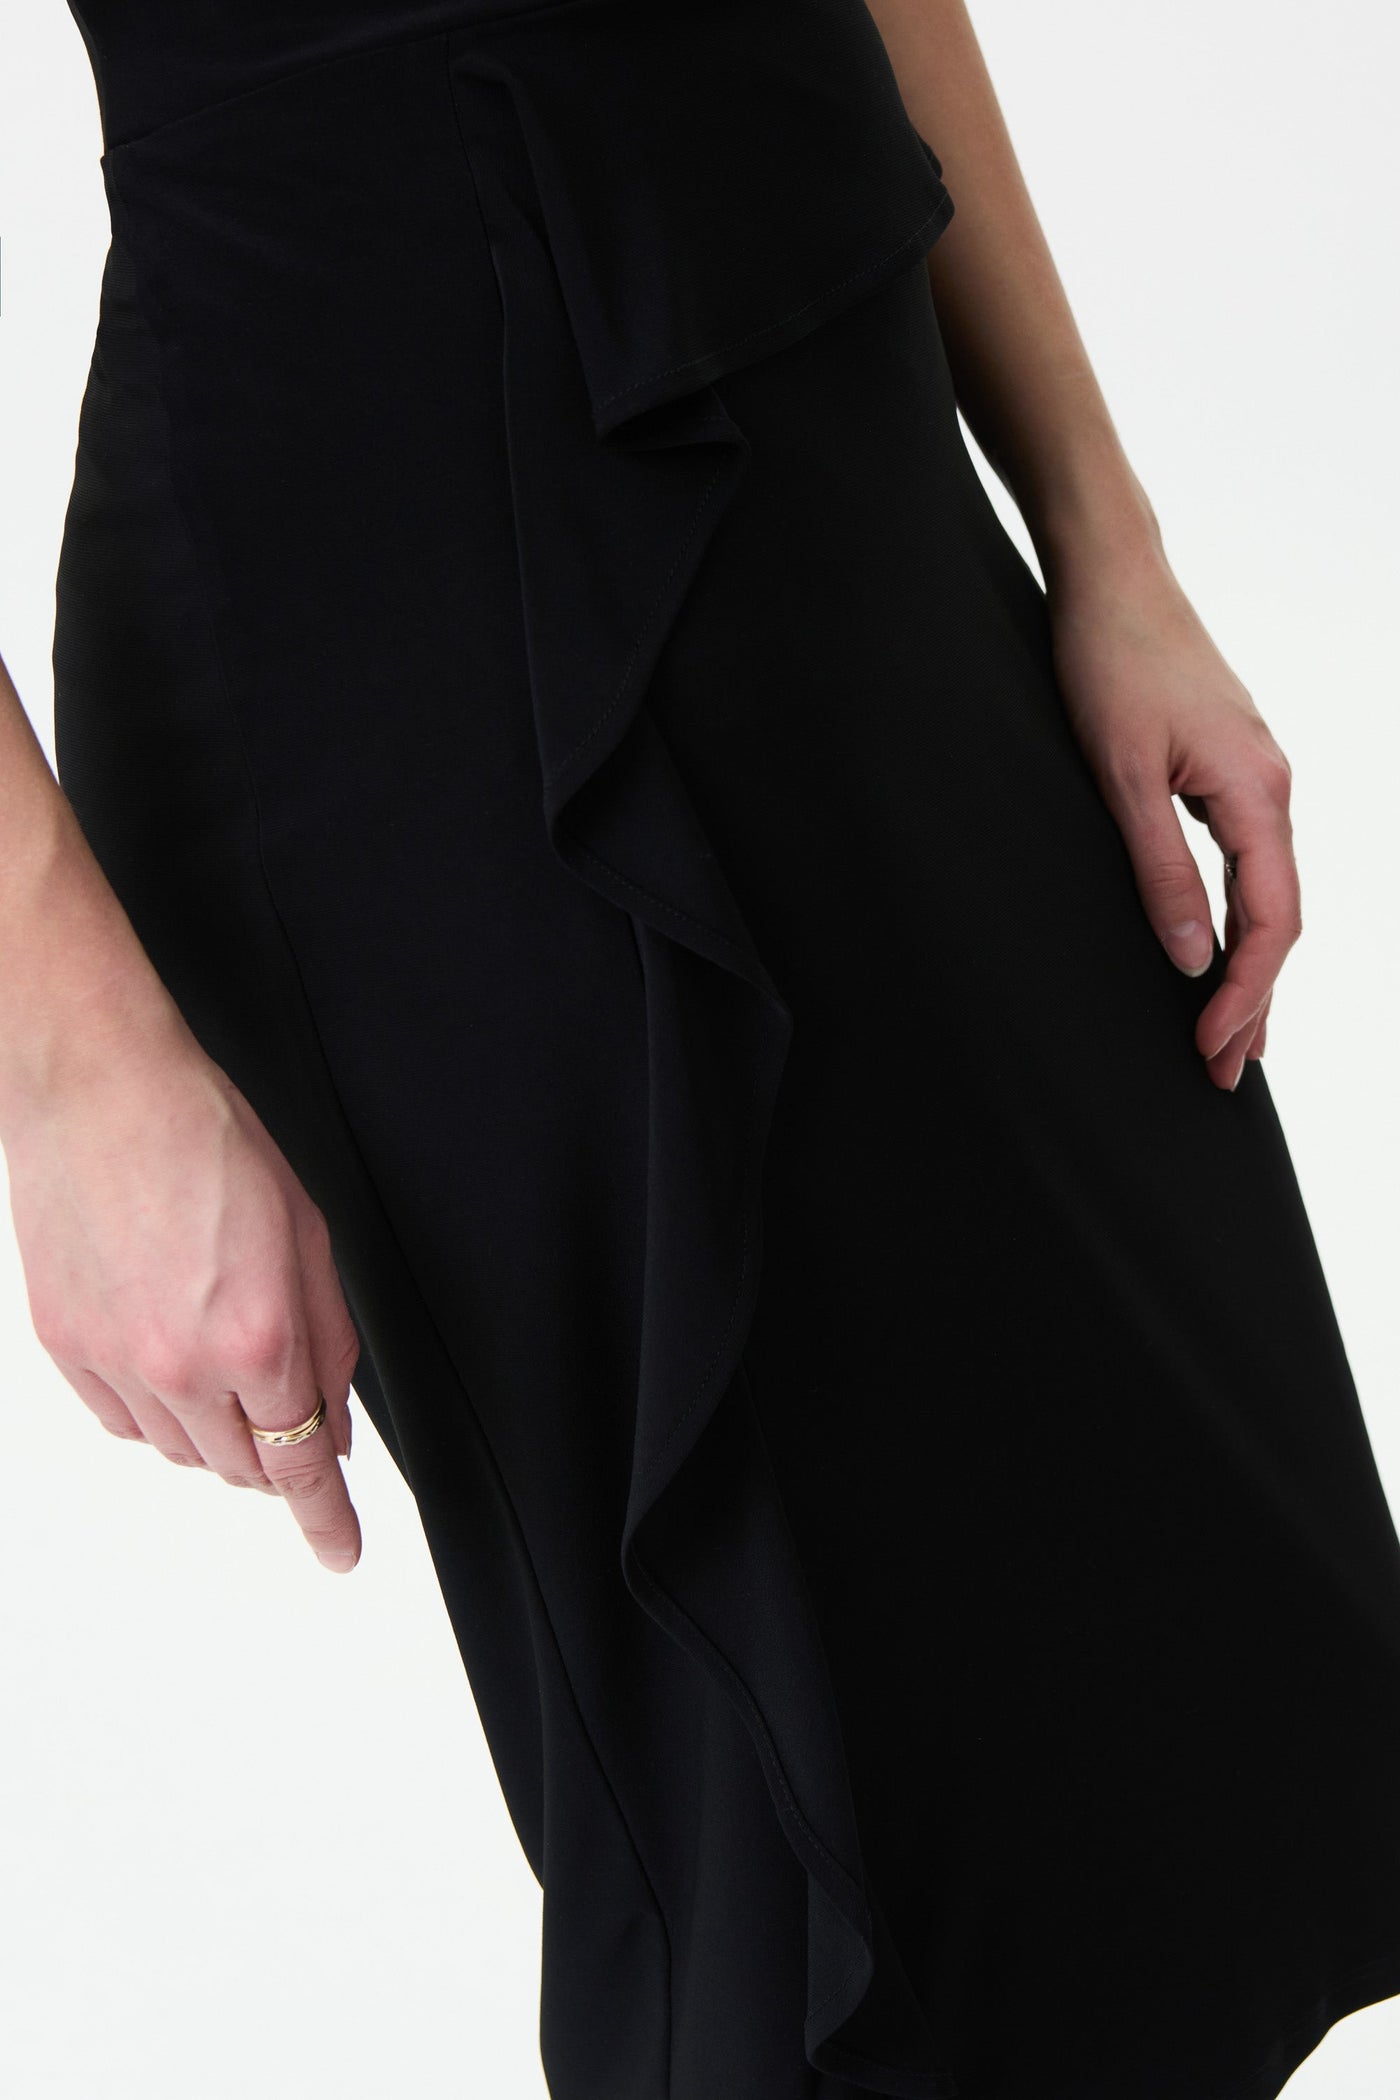 Joseph Ribkoff Skirt Style 224338